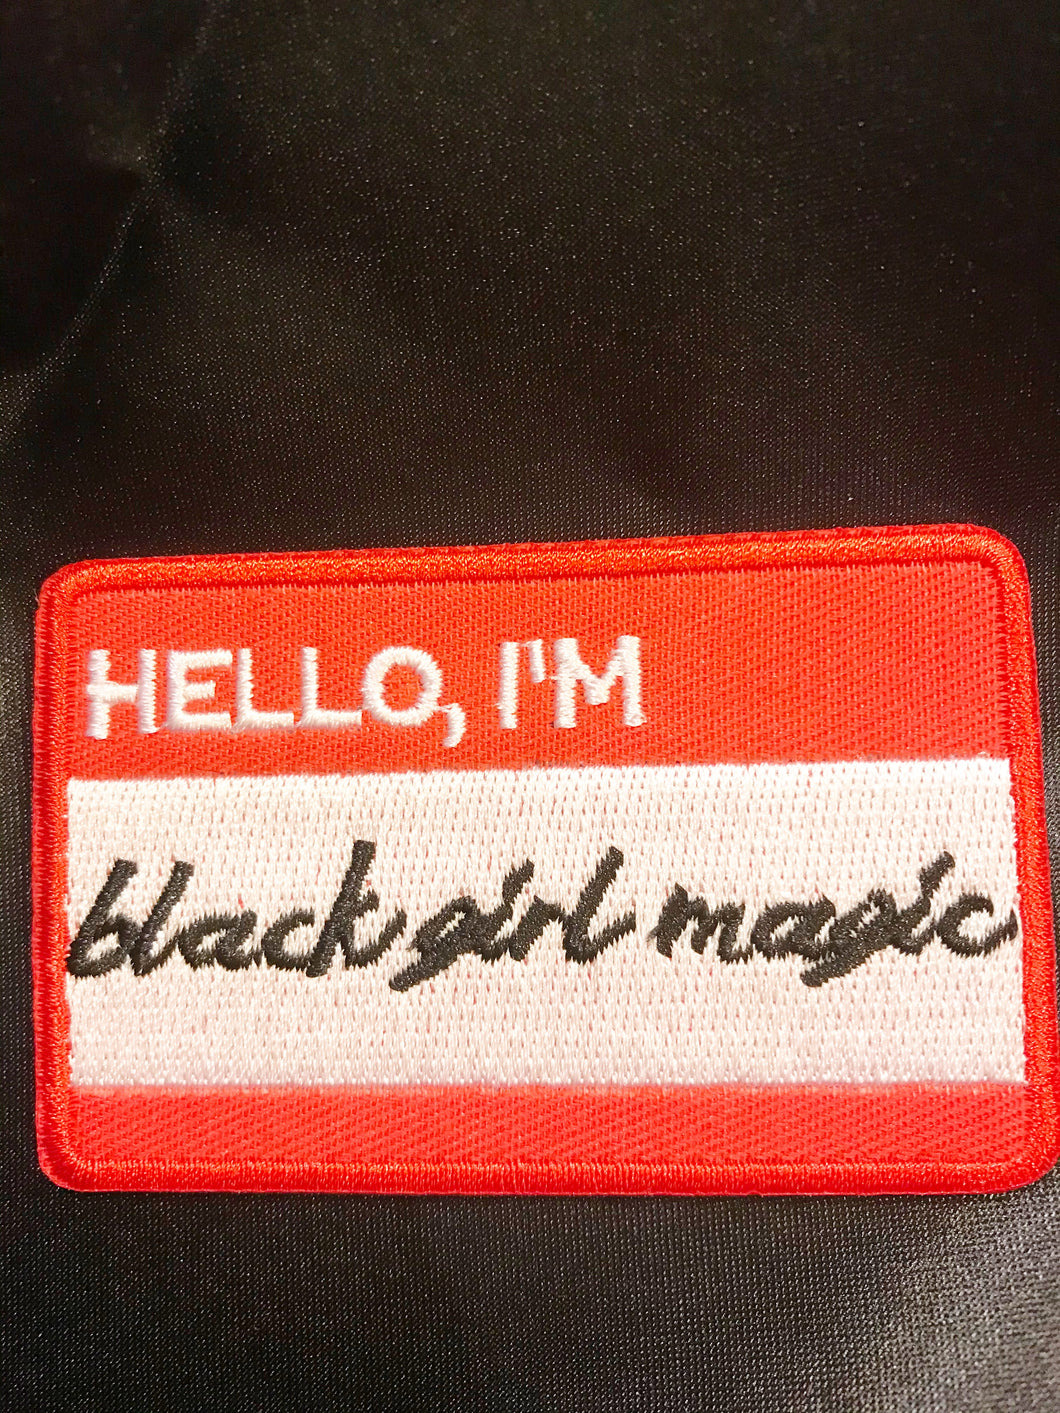 Black Girl Magic Name Tag Patch